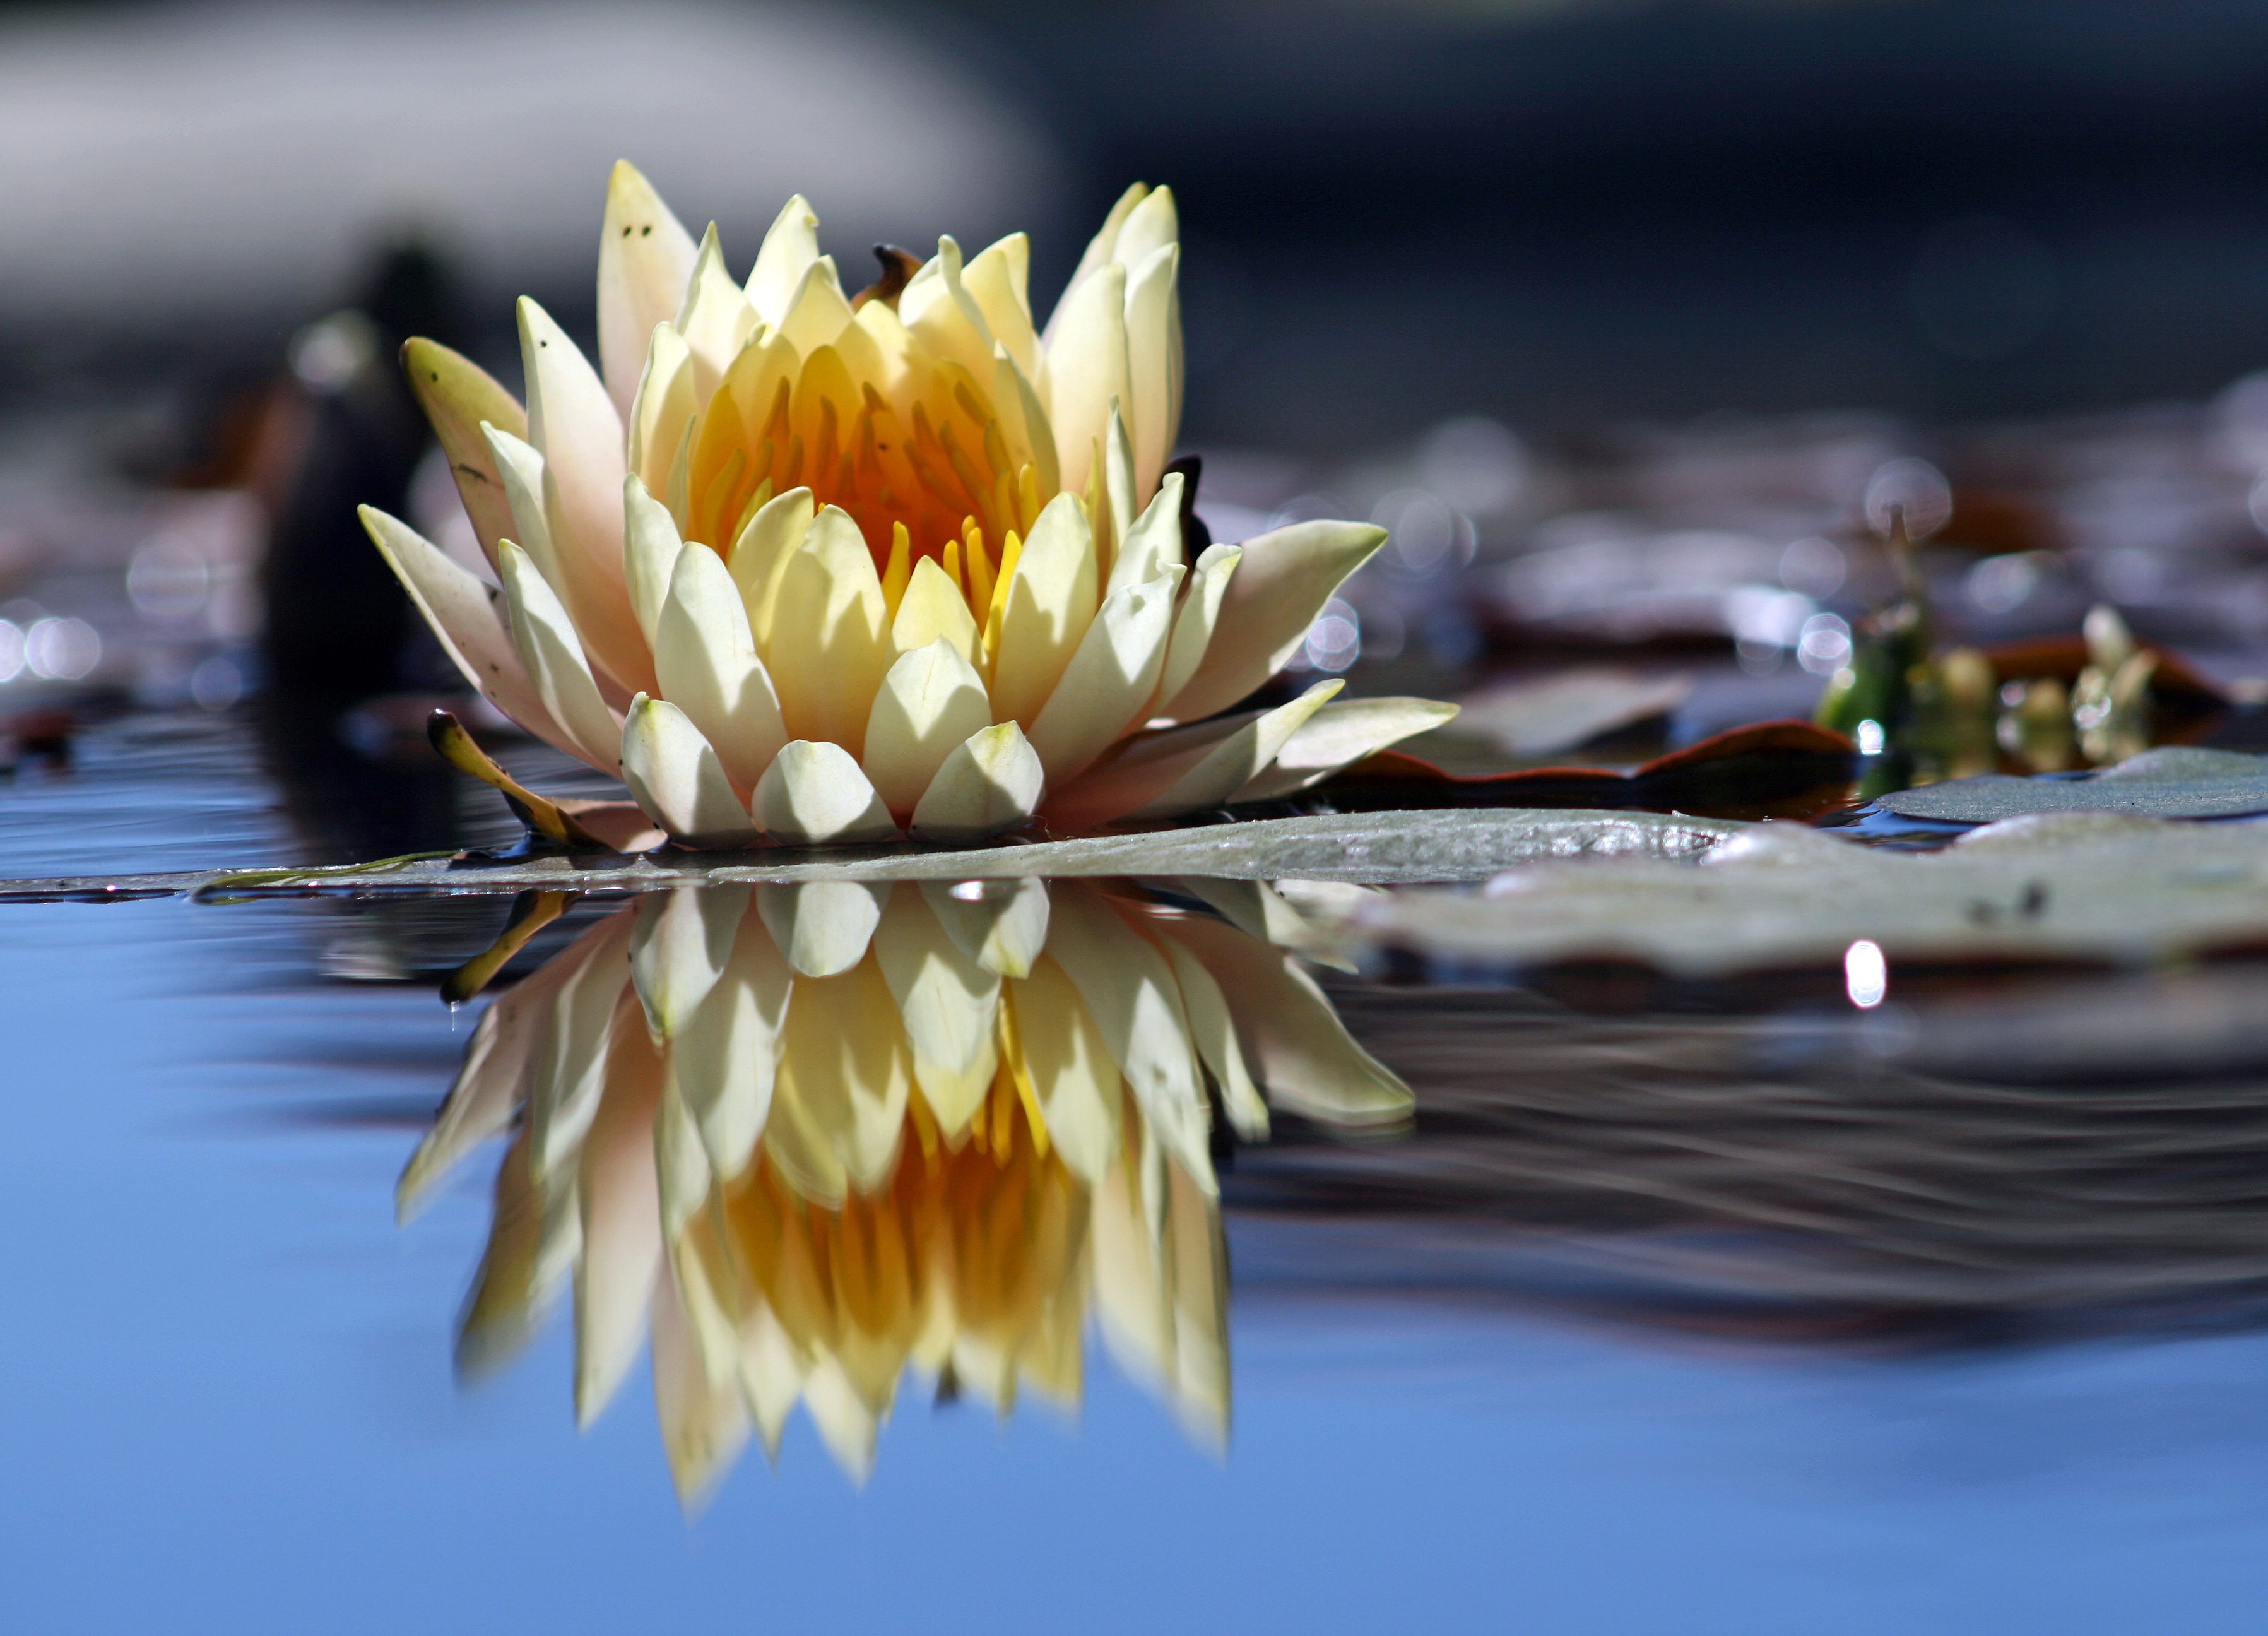 Flower reflection